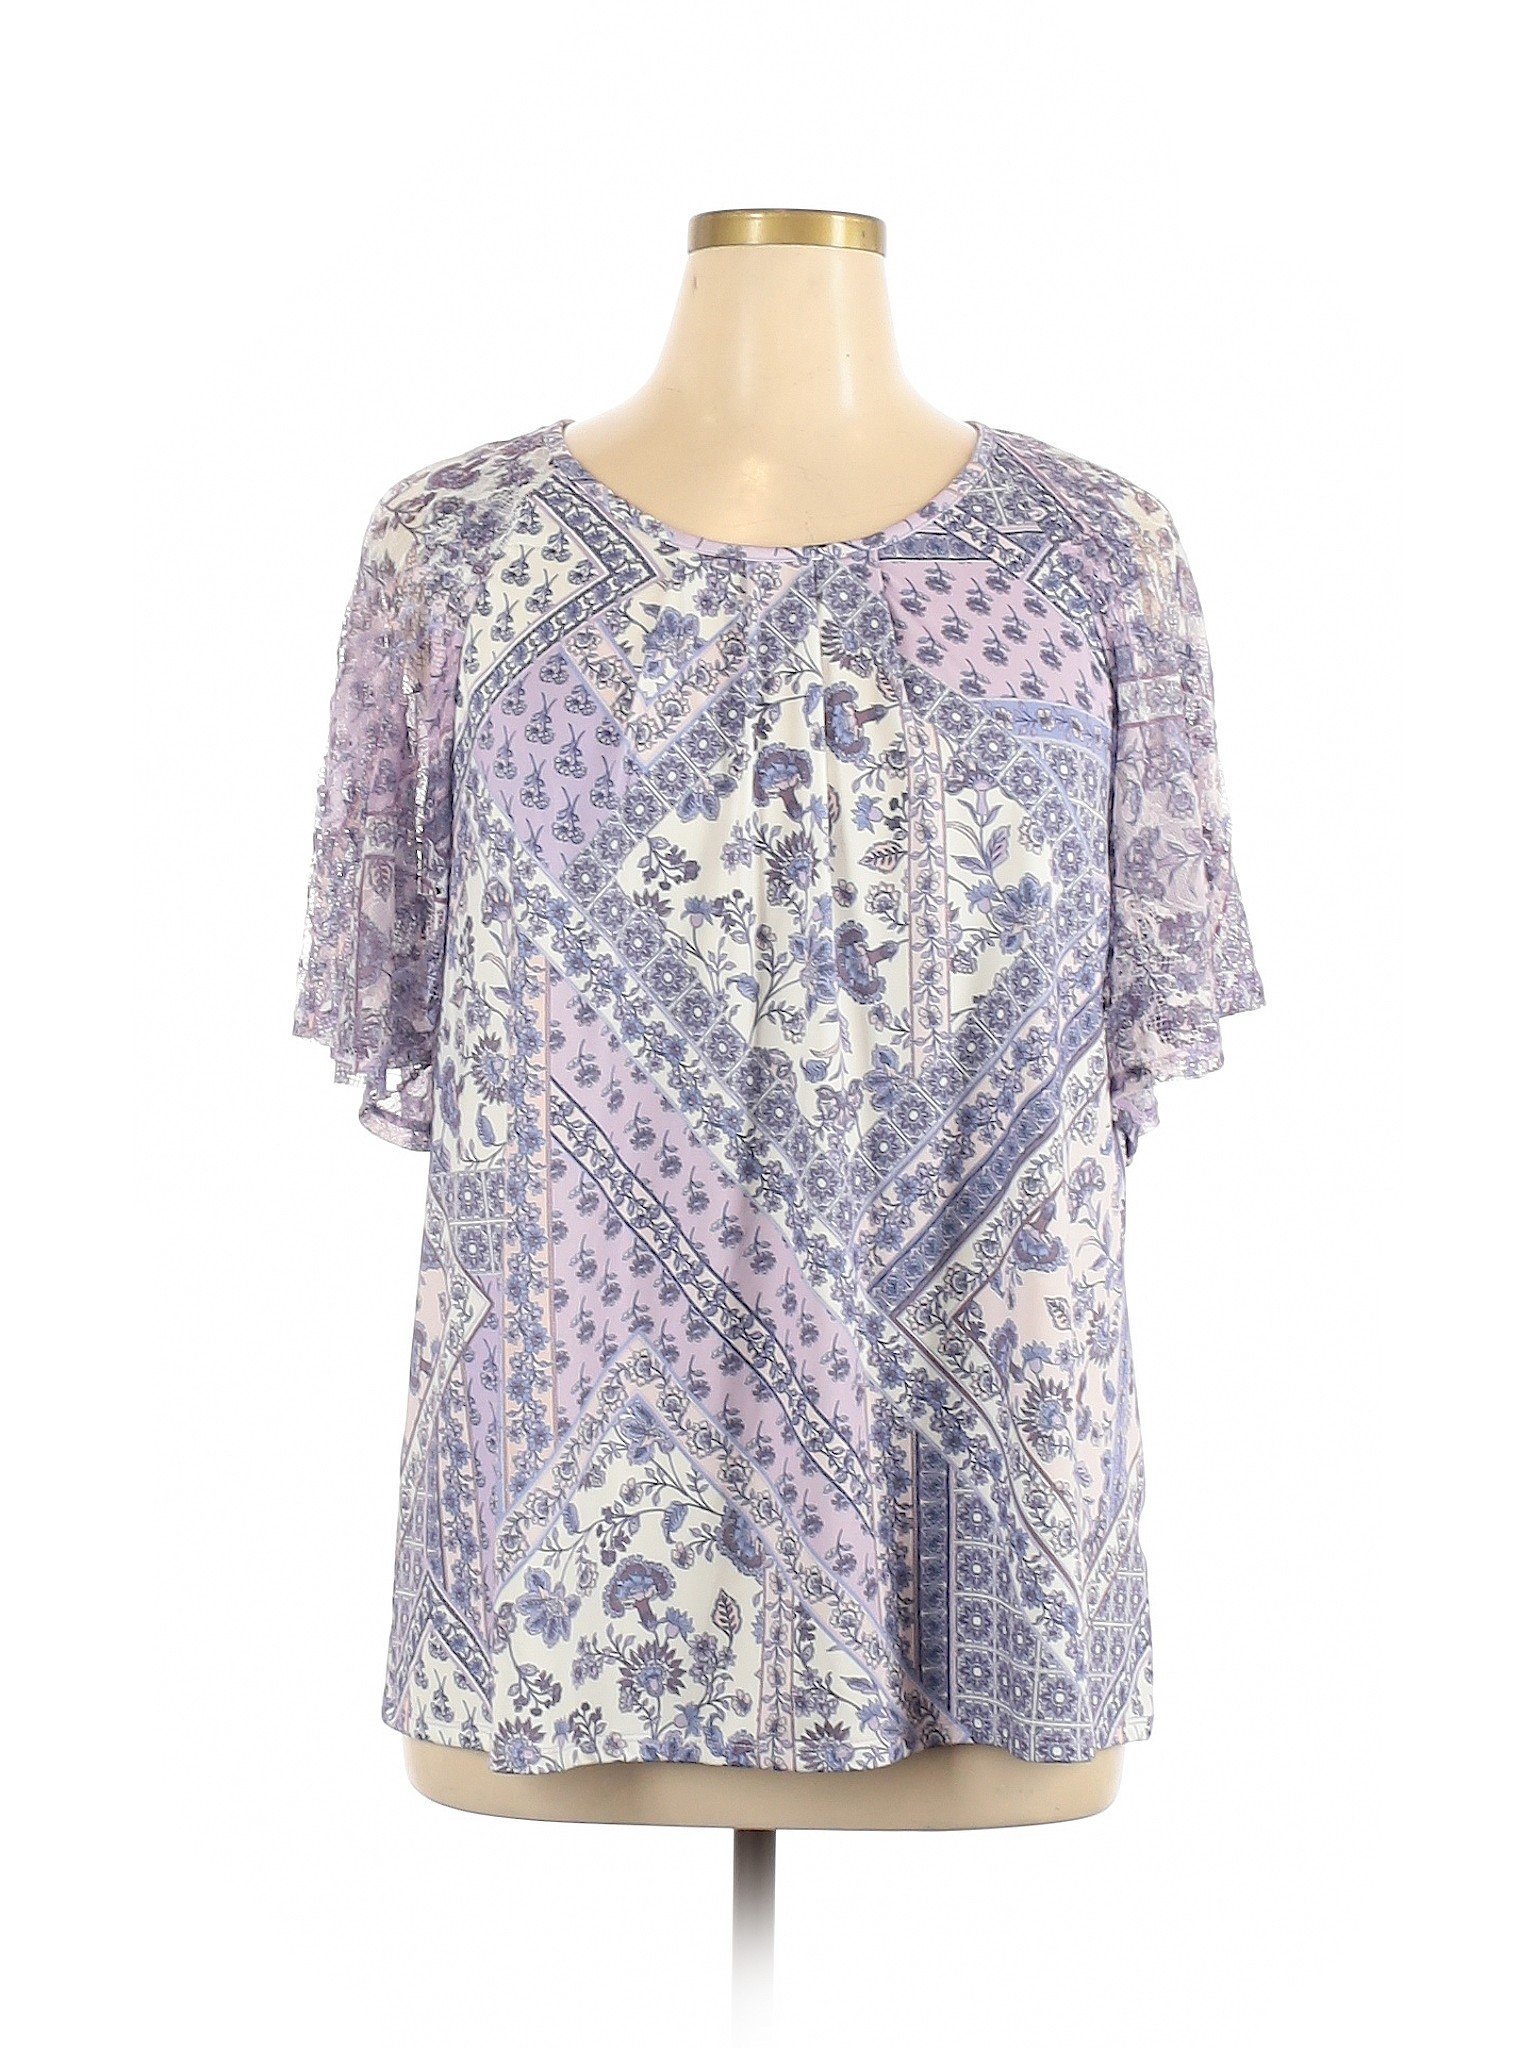 Roz & Ali Women Purple Short Sleeve Top 1X Plus | eBay